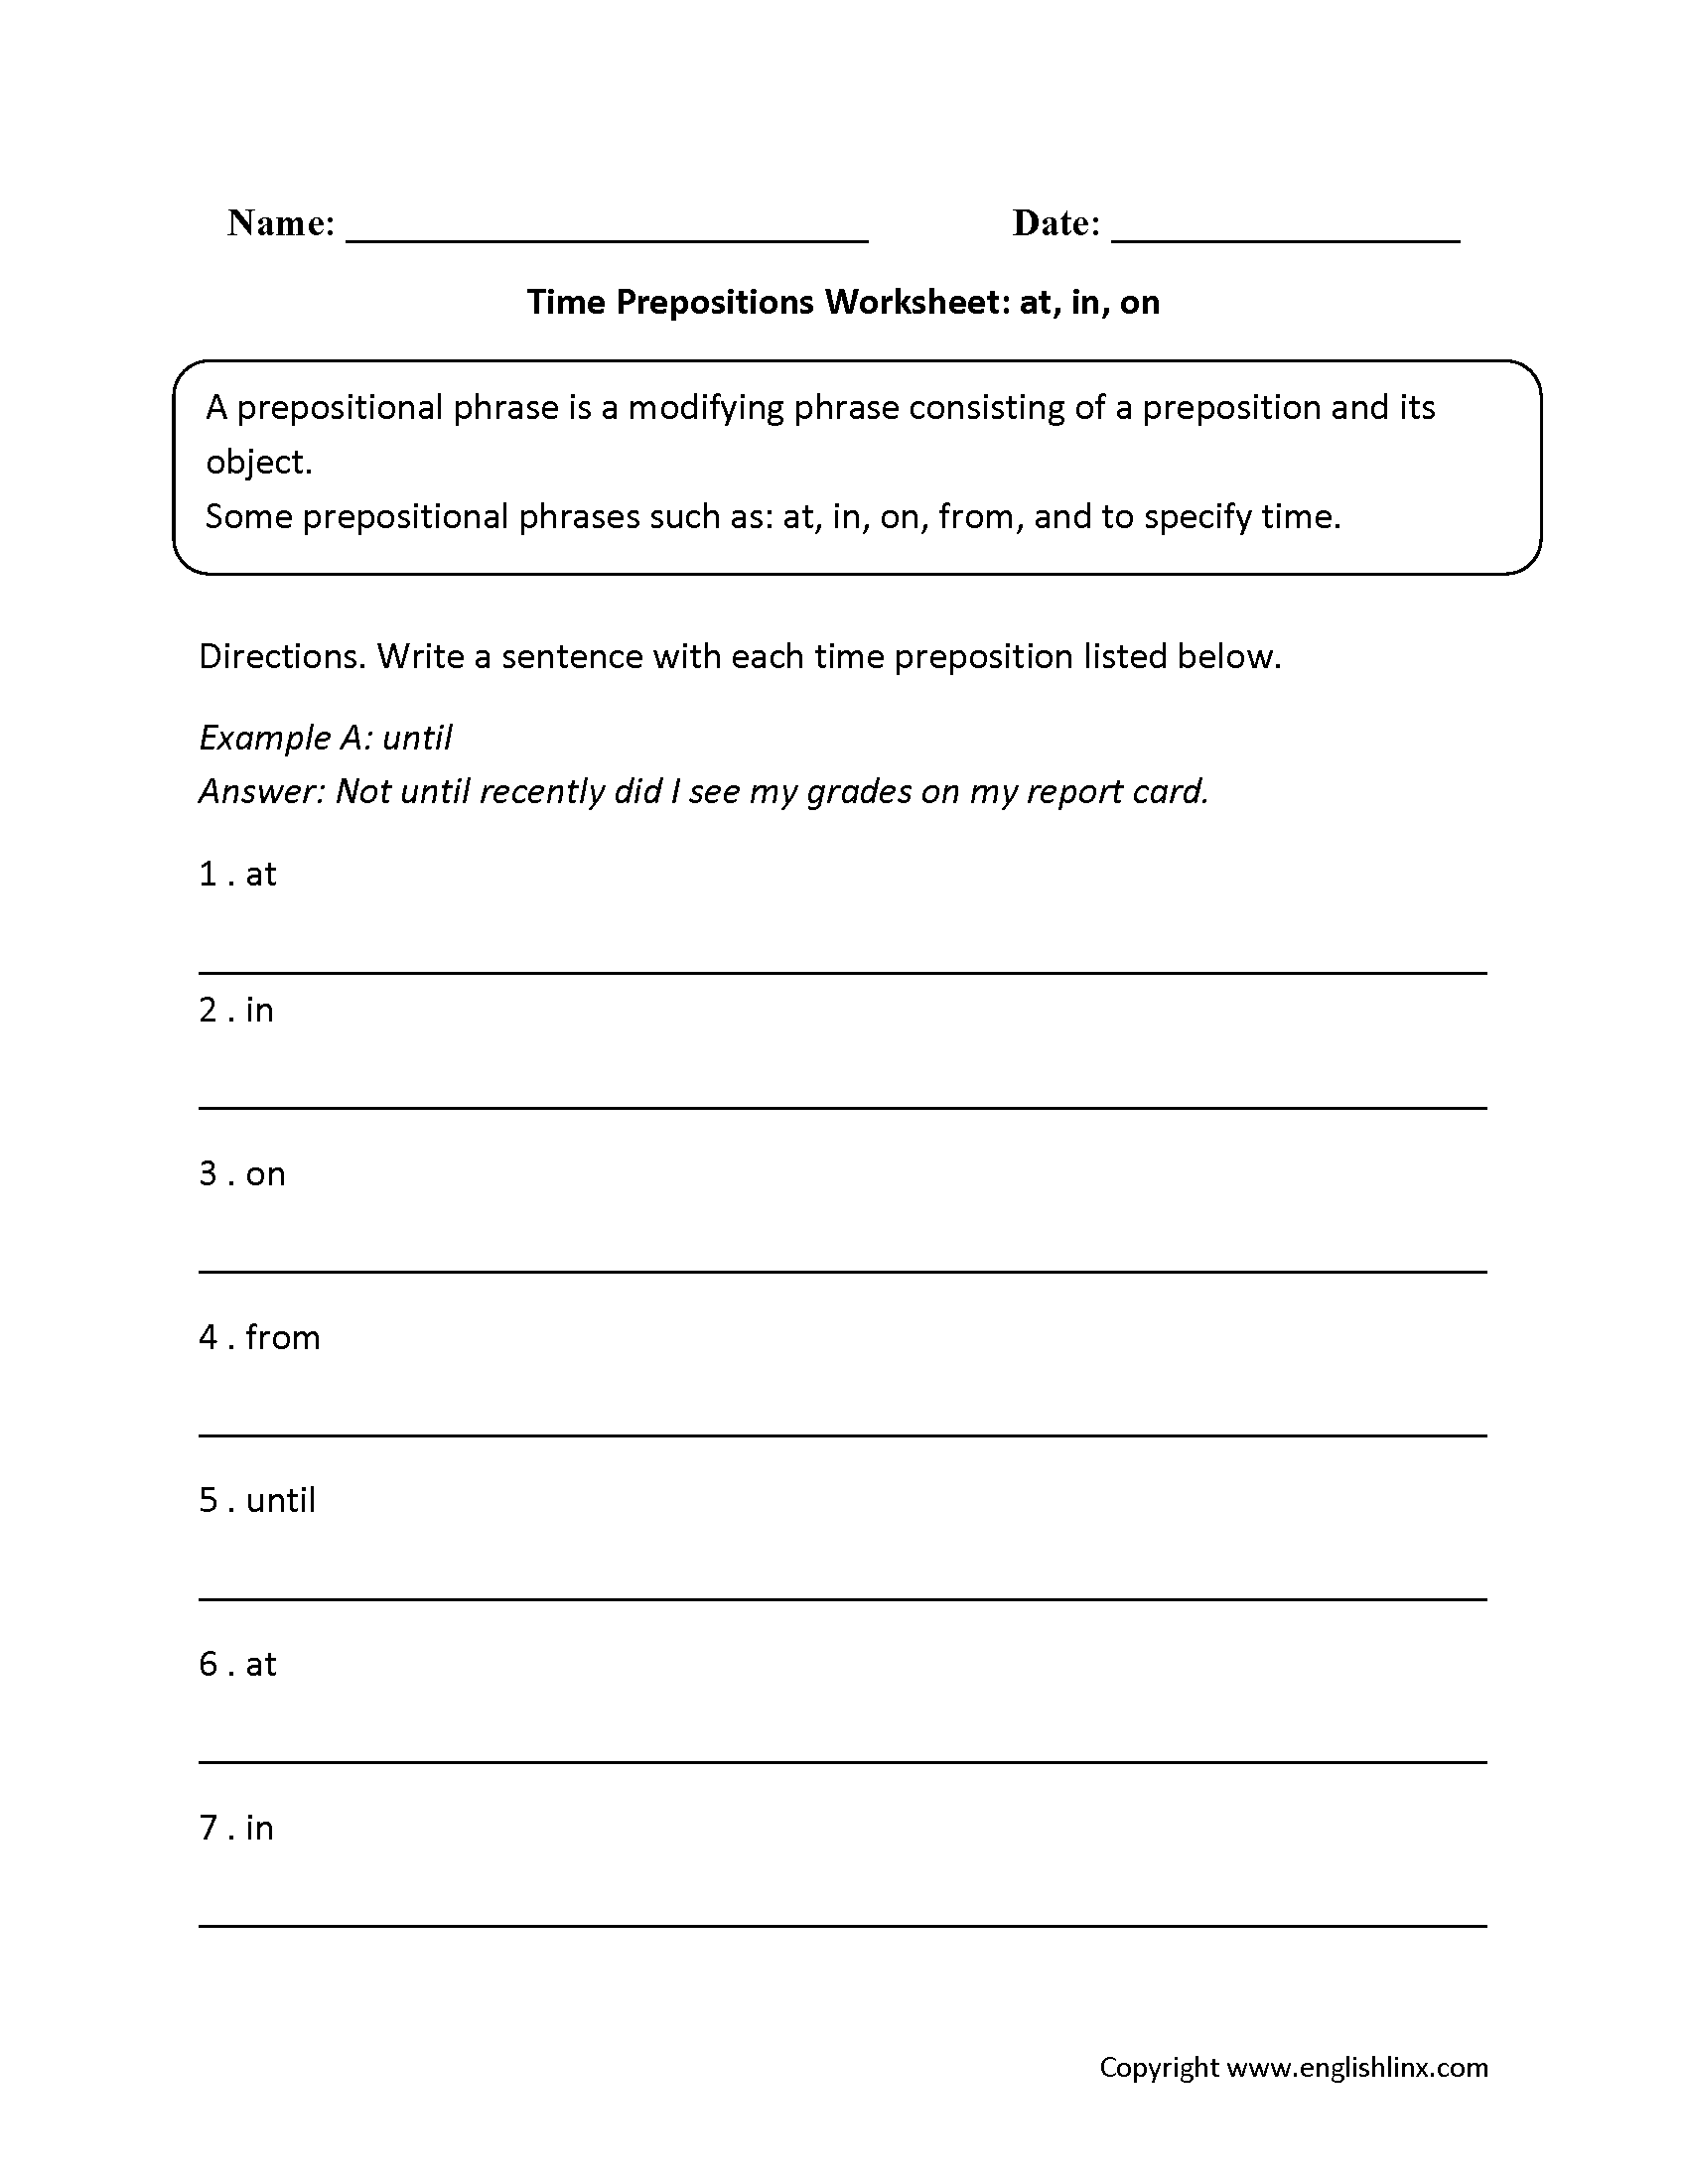 Time Prepositions Worksheet